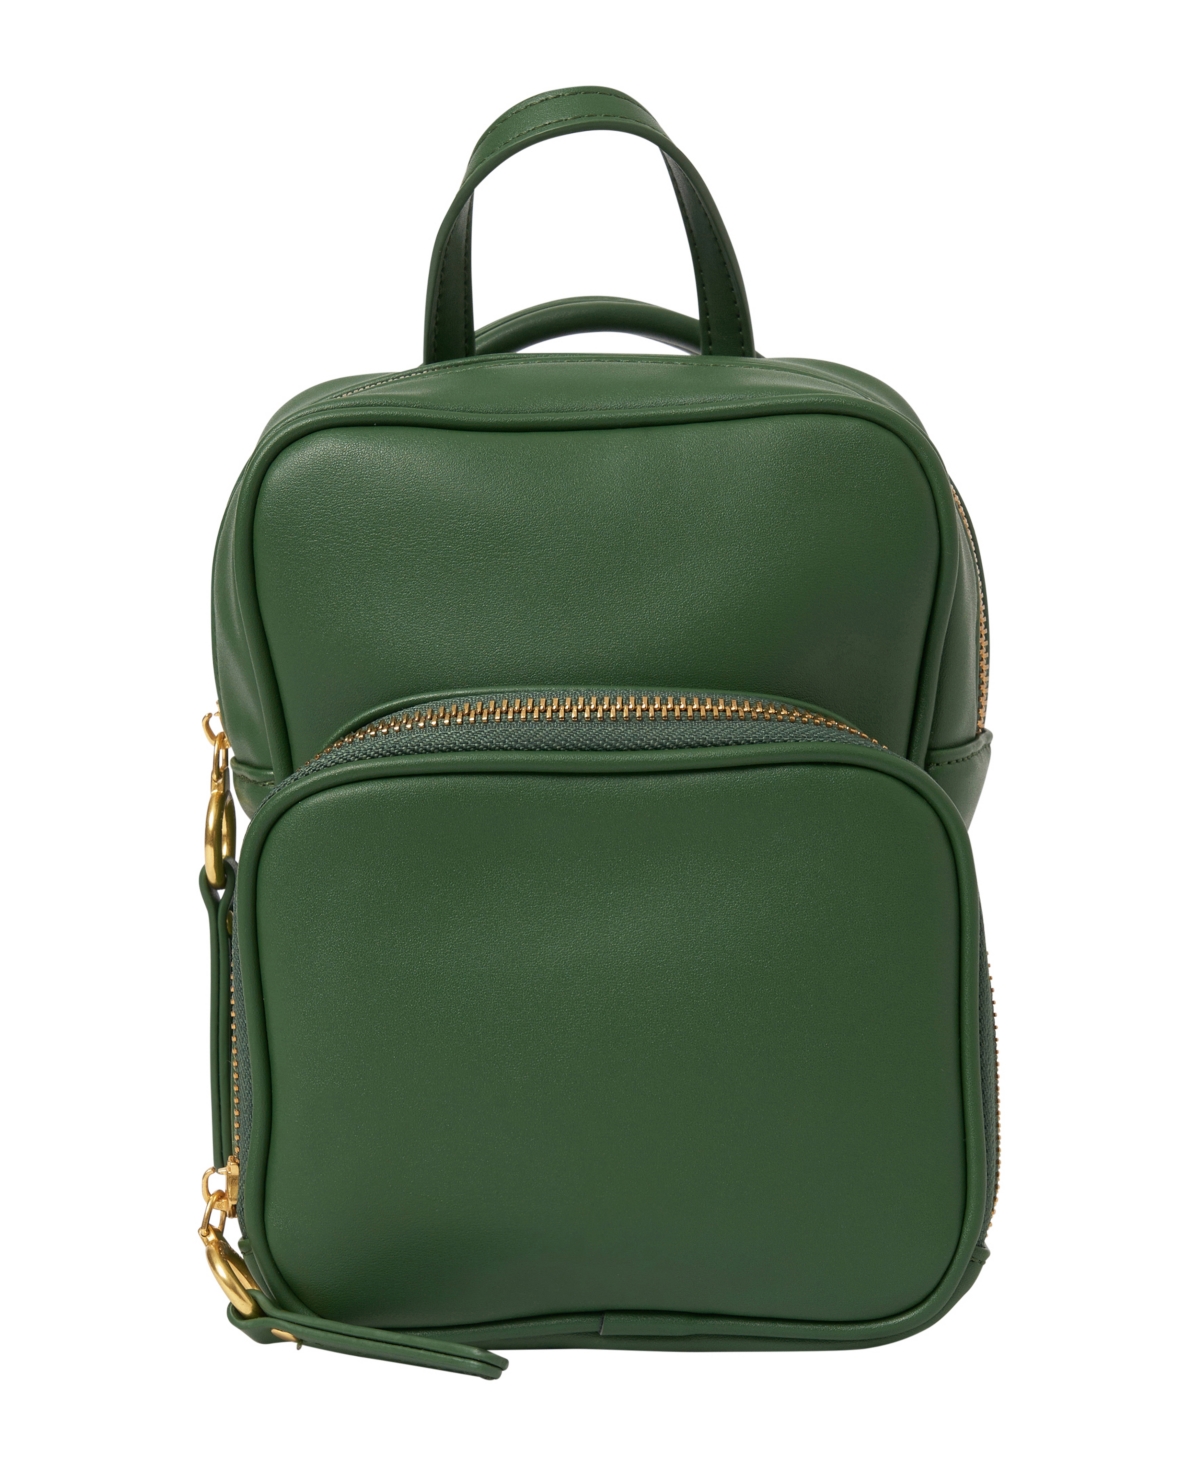 Urban Originals Women's Voyage Backpack Bag In Green